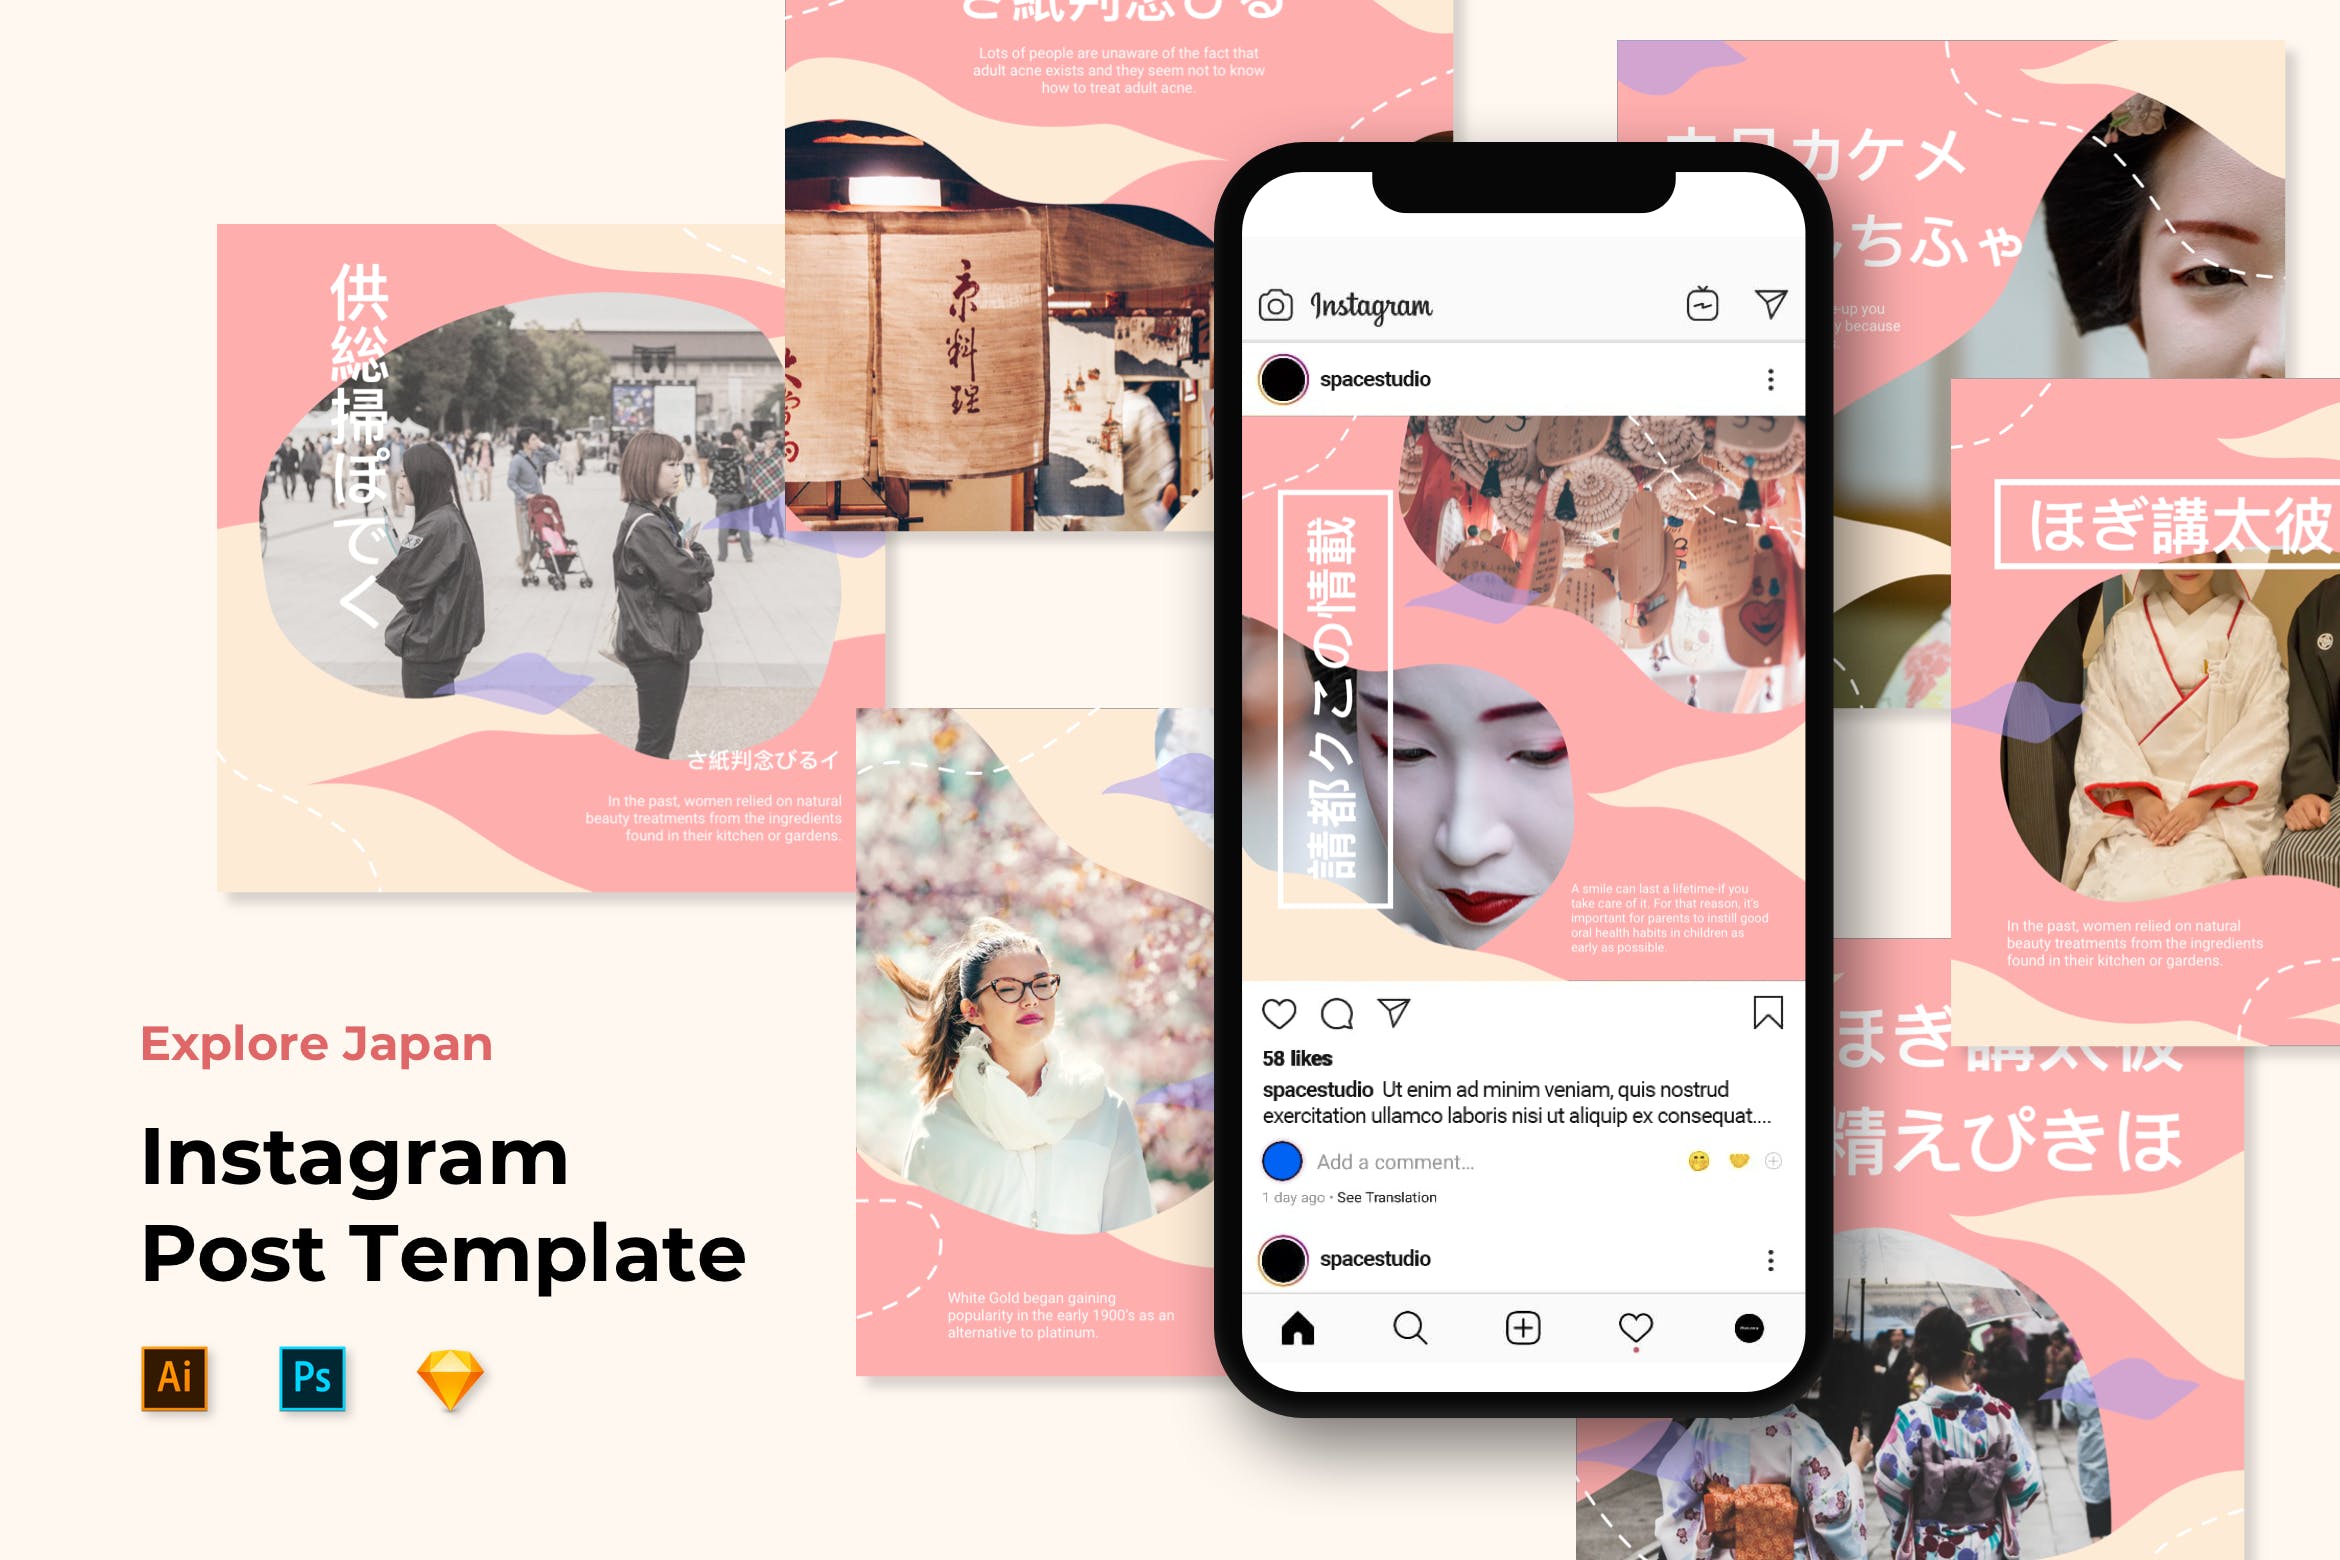 日本设计风格Instagram社交推广设计素材包 Instagram Templates Japan Design Style插图